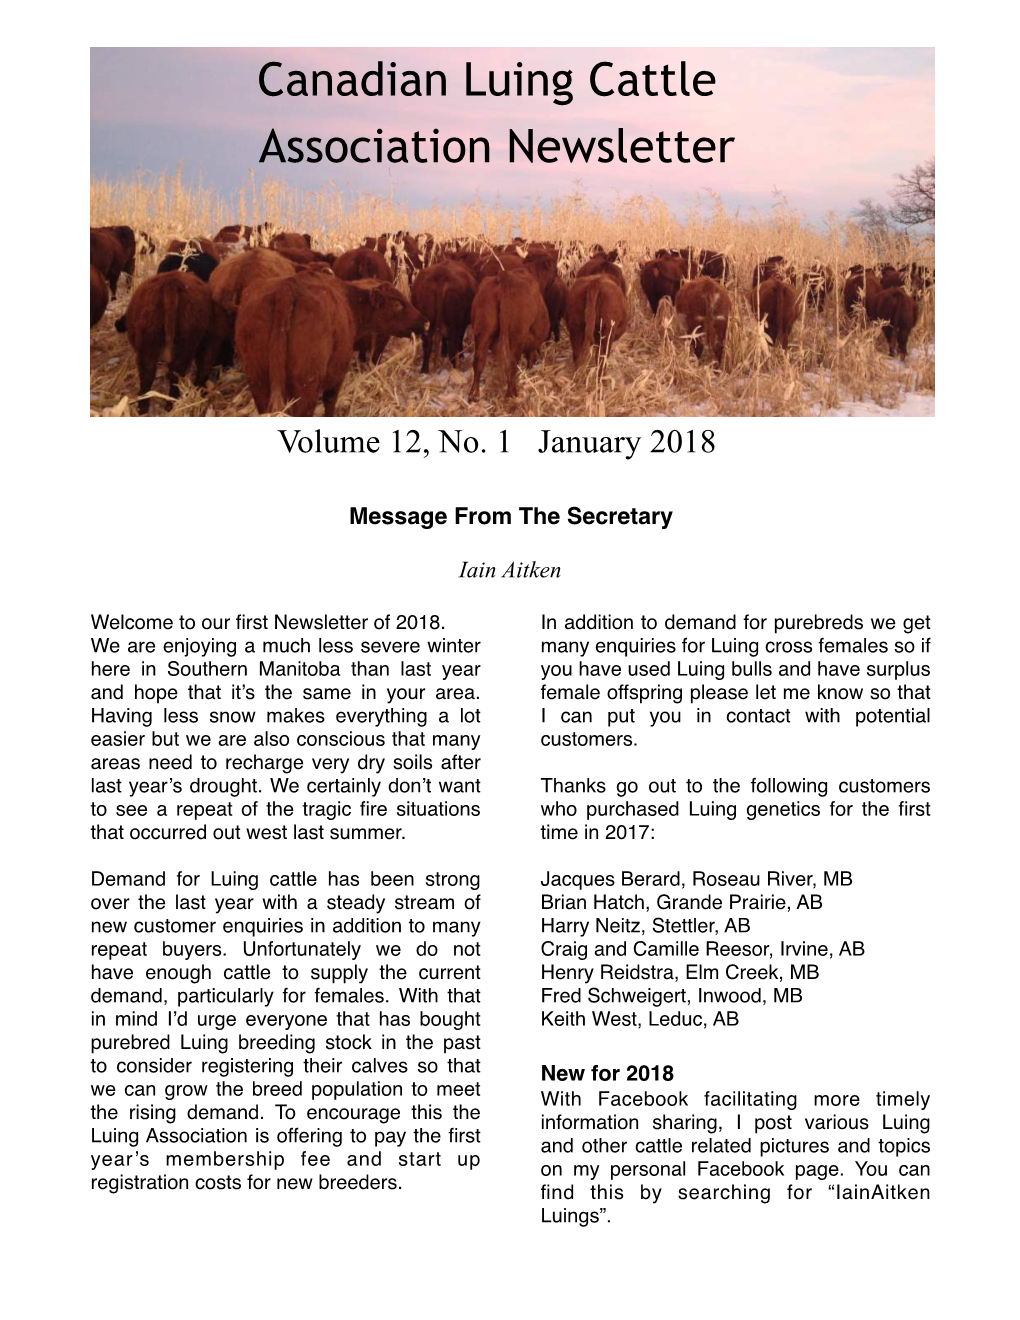 Canadian Luing Cattle Association Newsletter